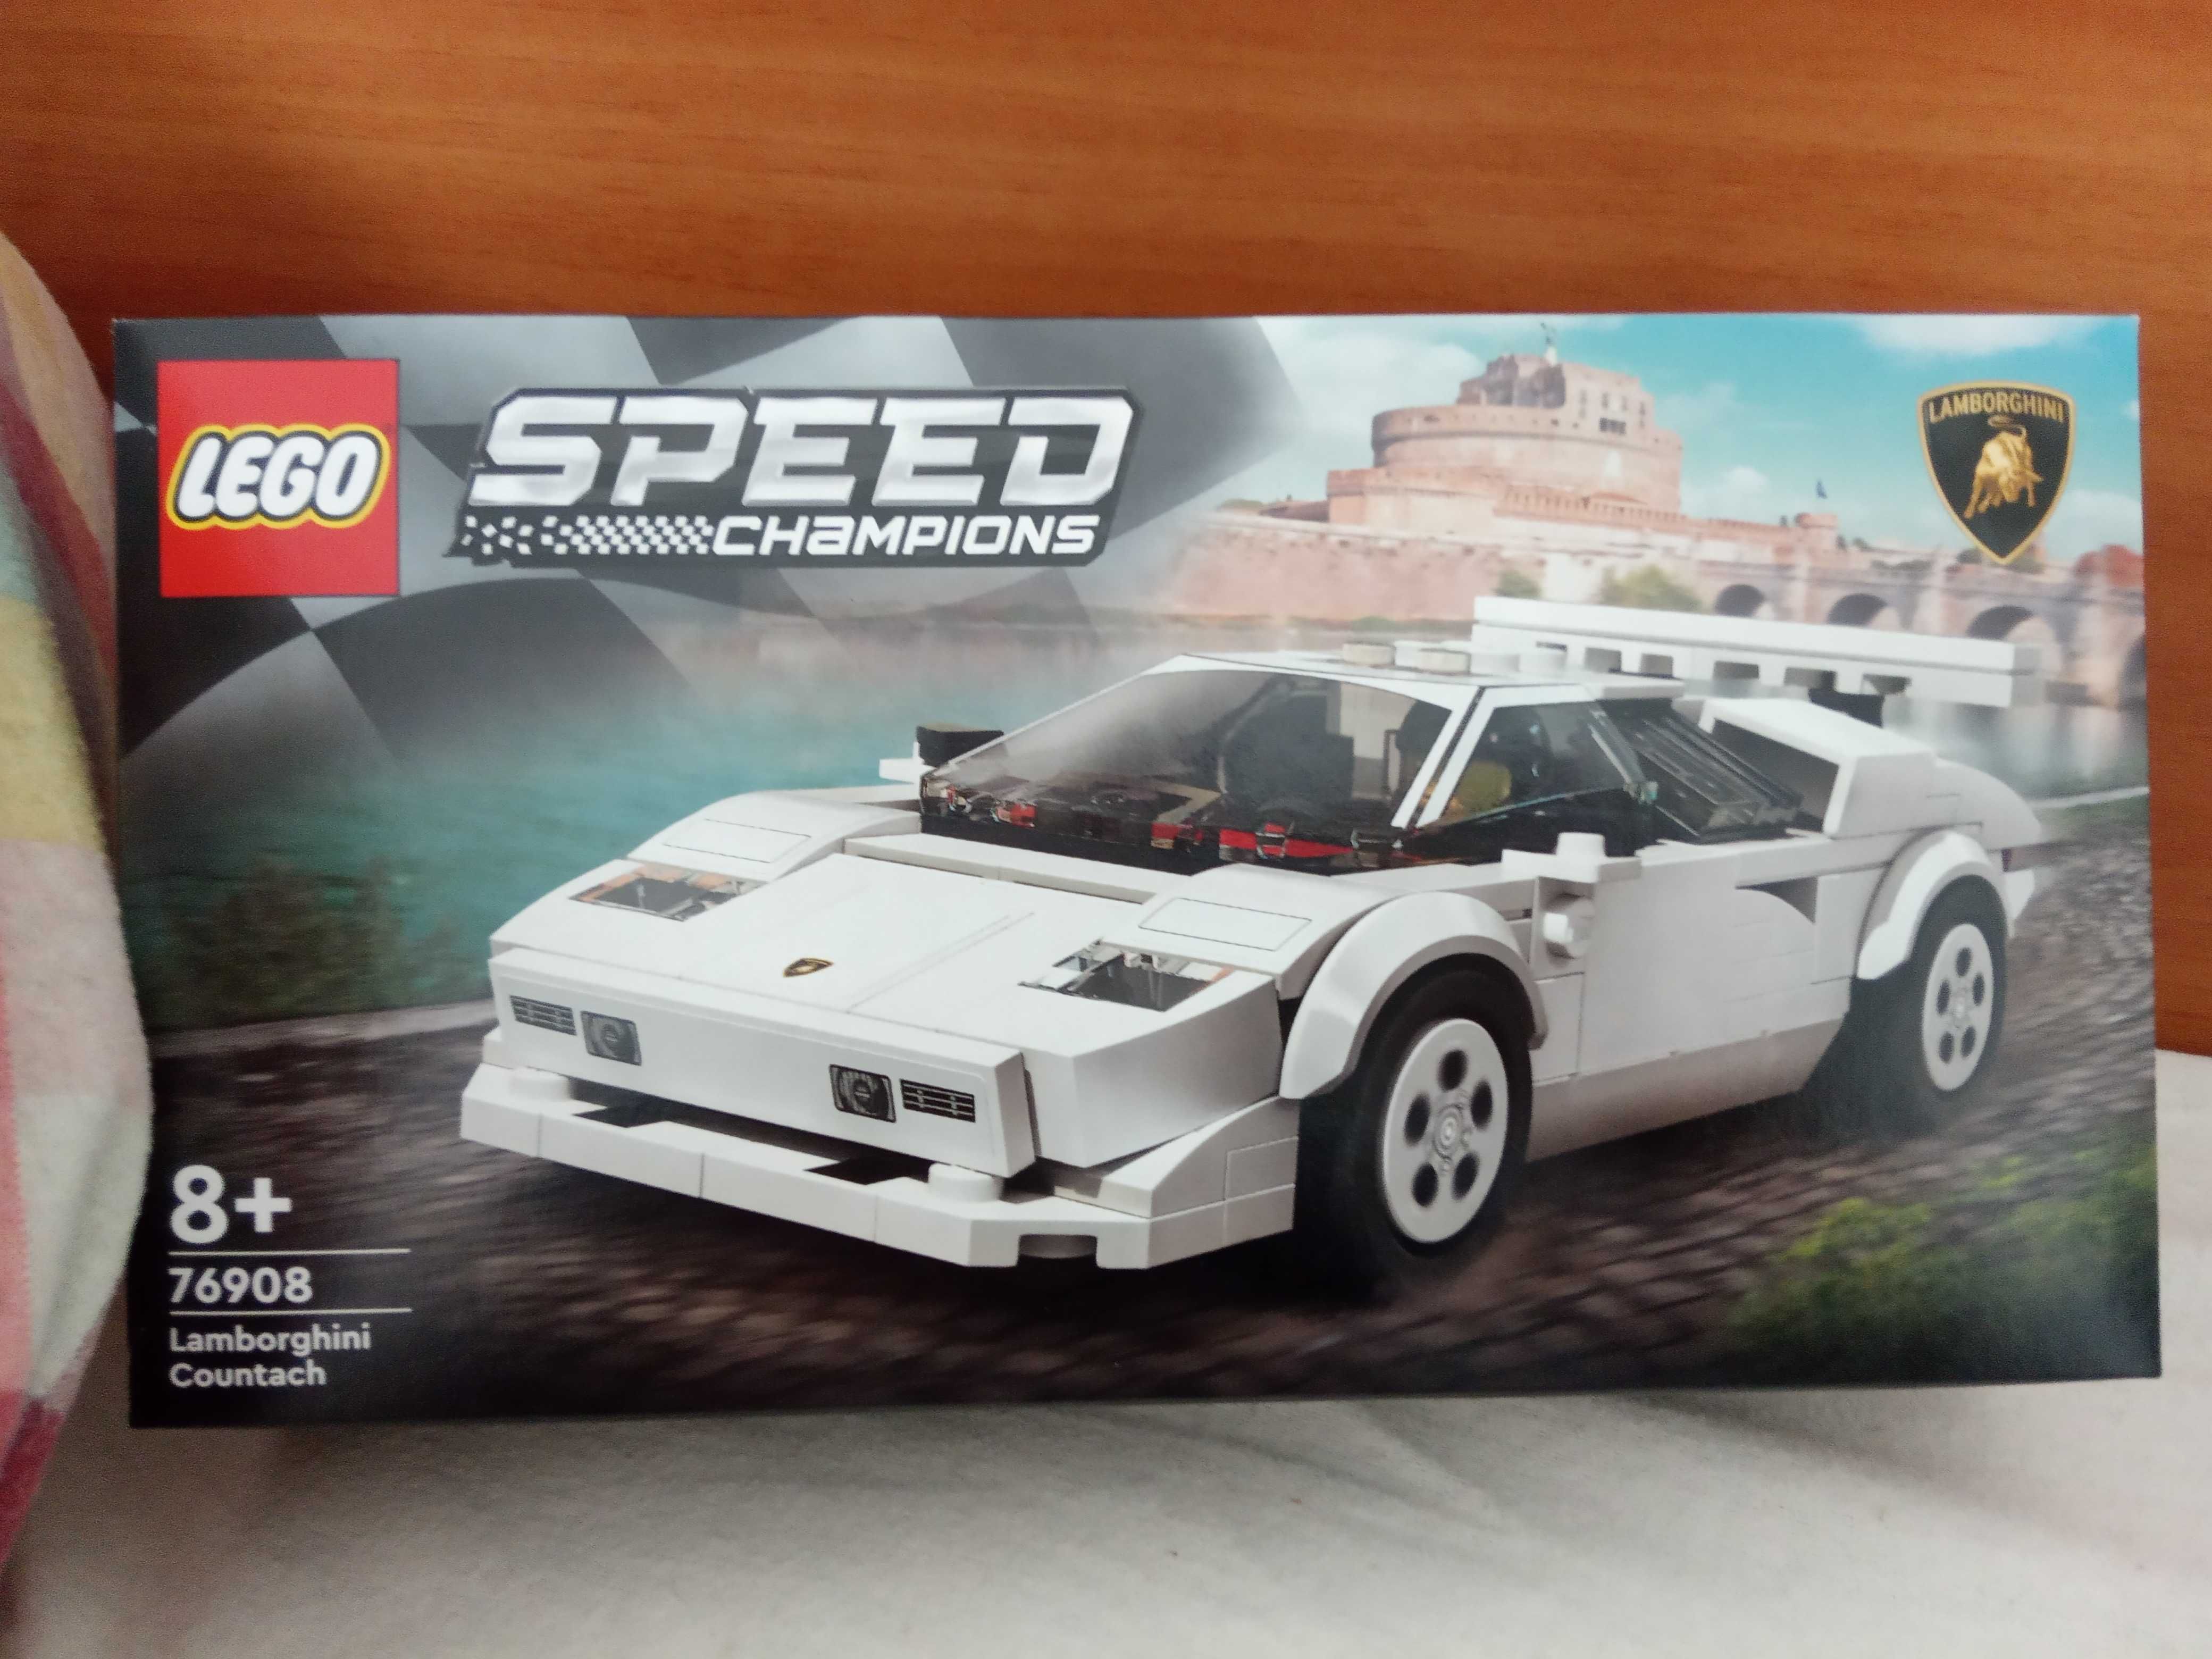 Lego 76908 Lamborghini Countach Speed Champions nou, sigilat